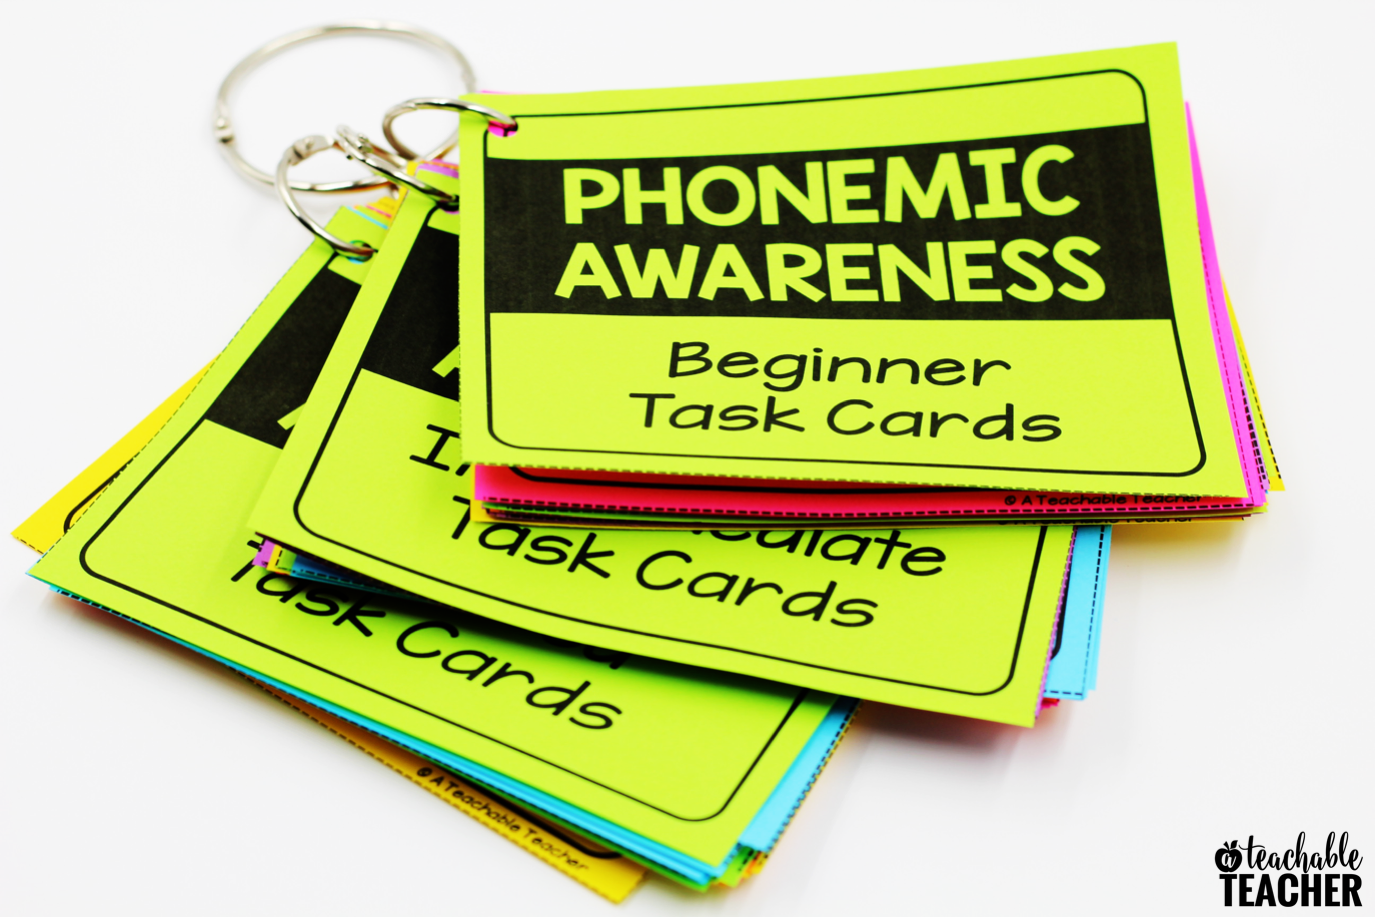 Phonemic Awareness activities